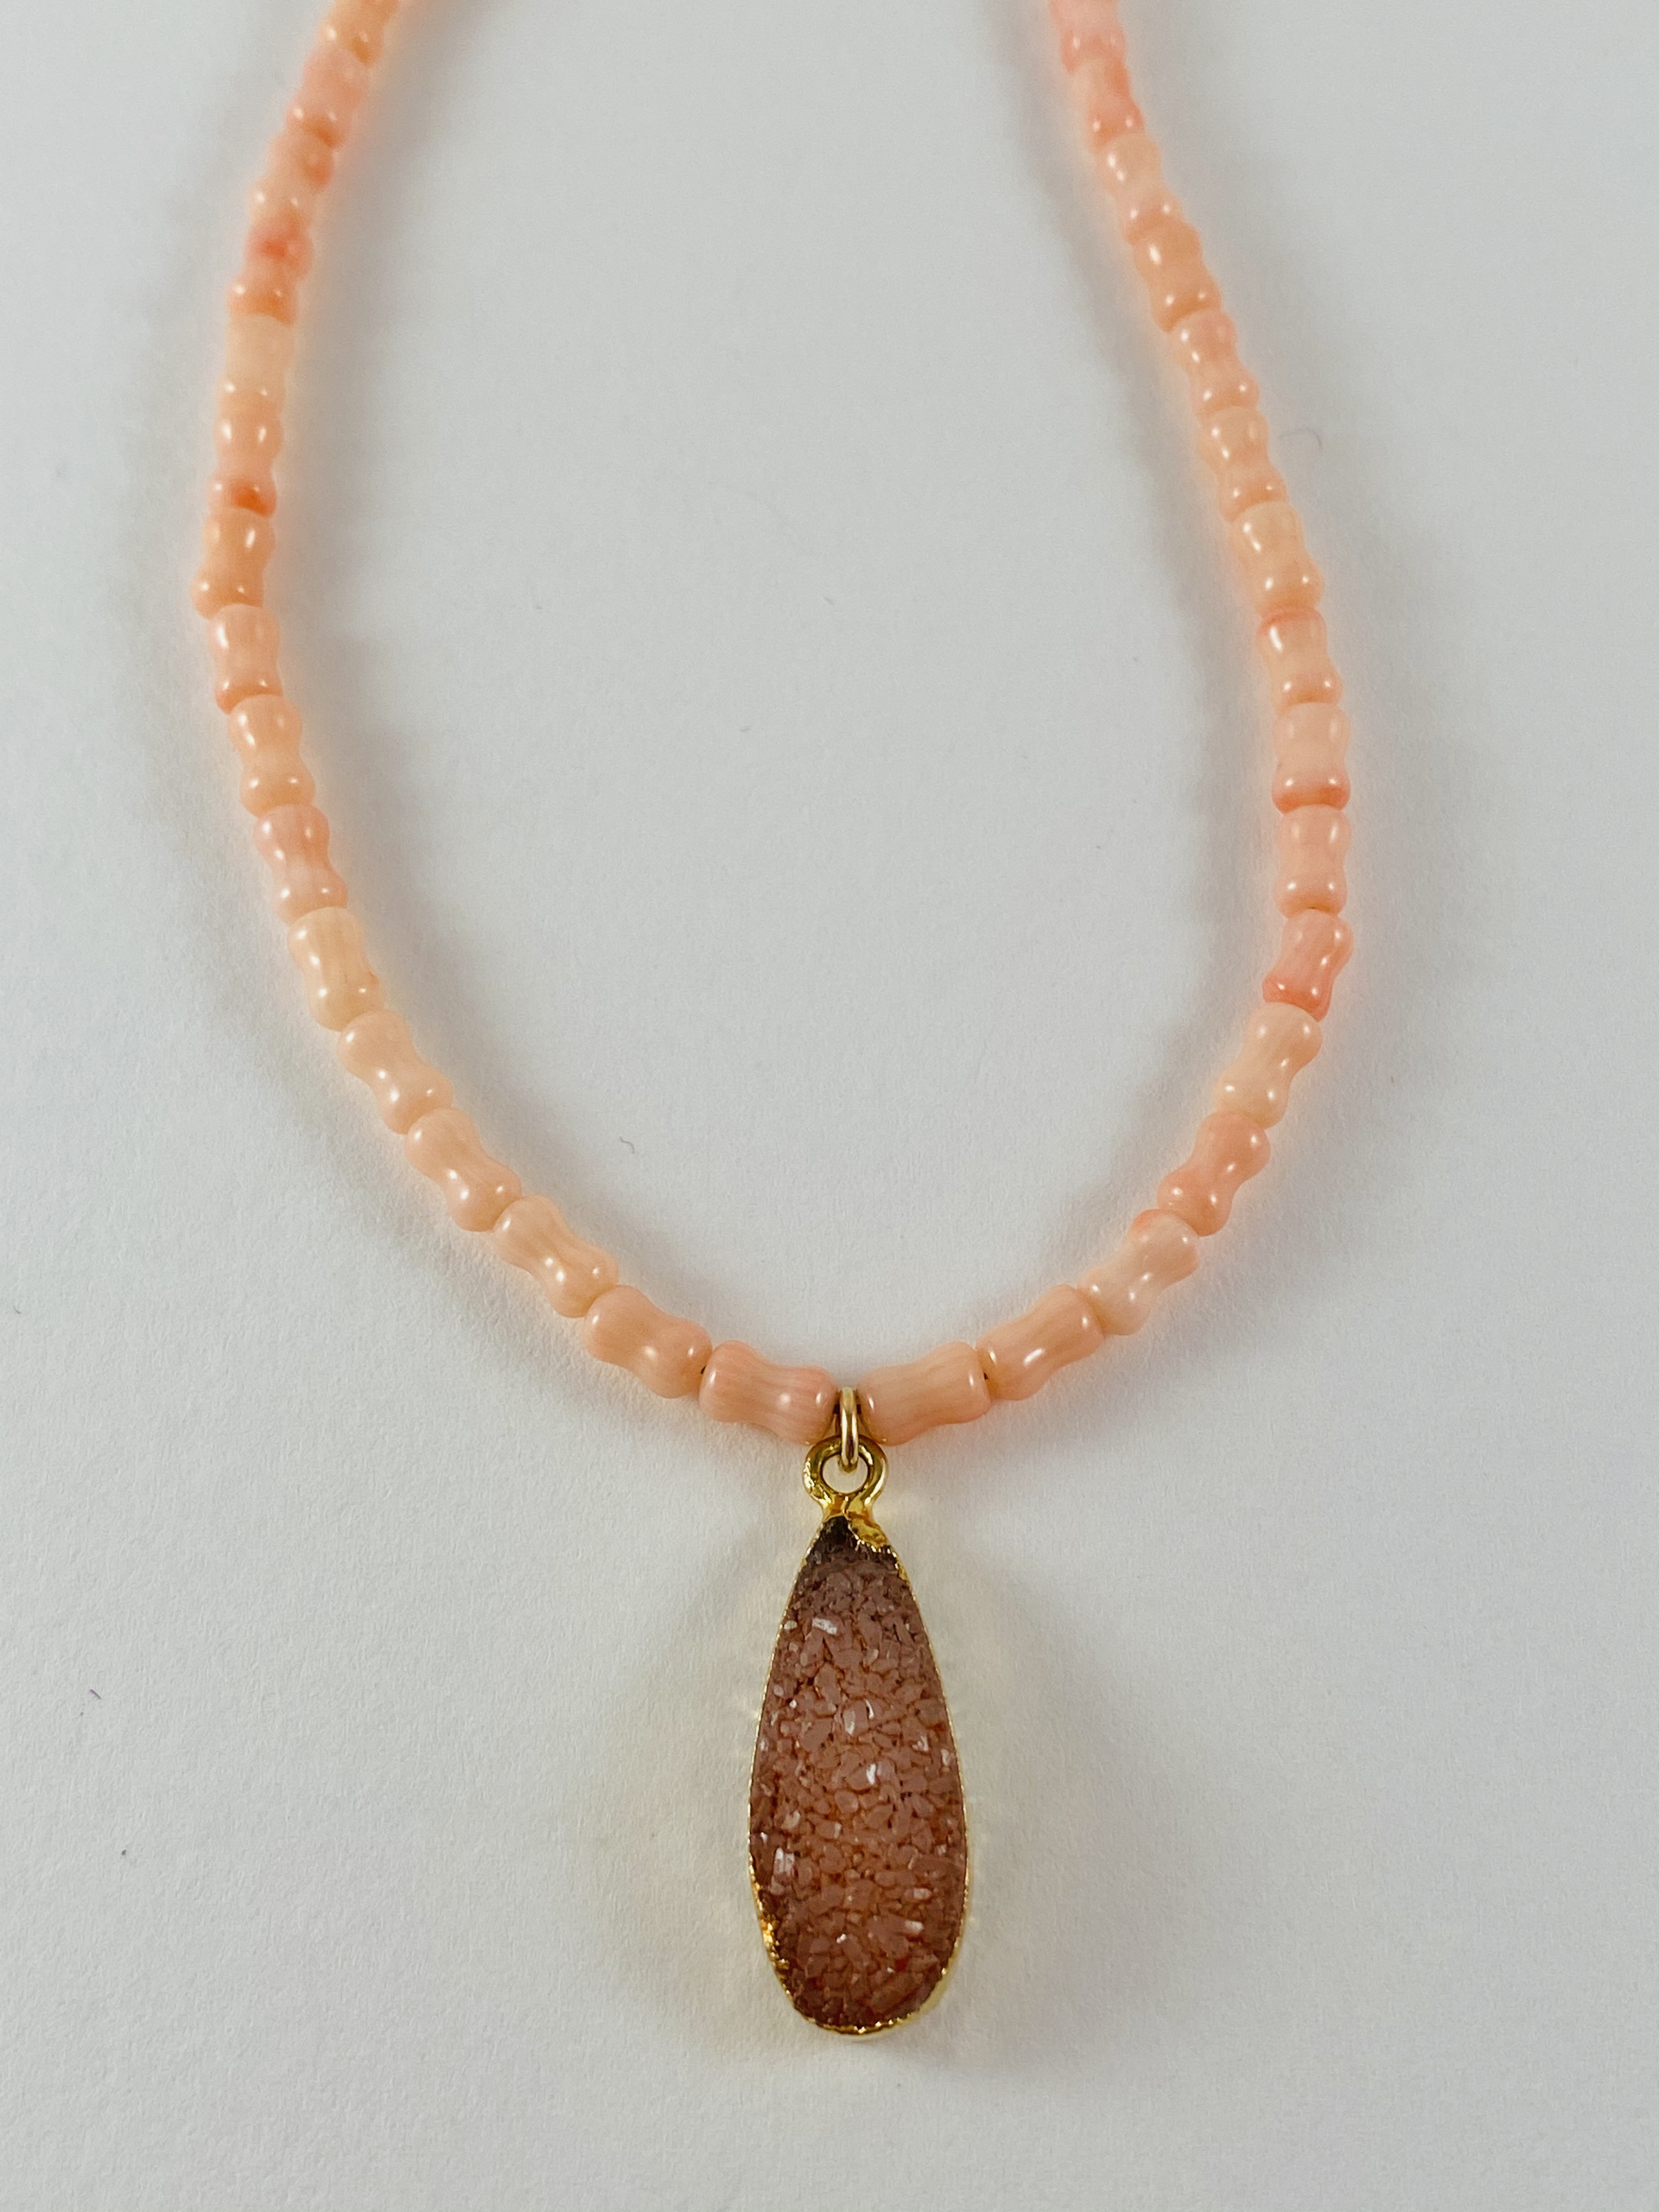 PC1 Pale Coral Bead Necklace, salmon druzy pendant by Nance Trueworthy